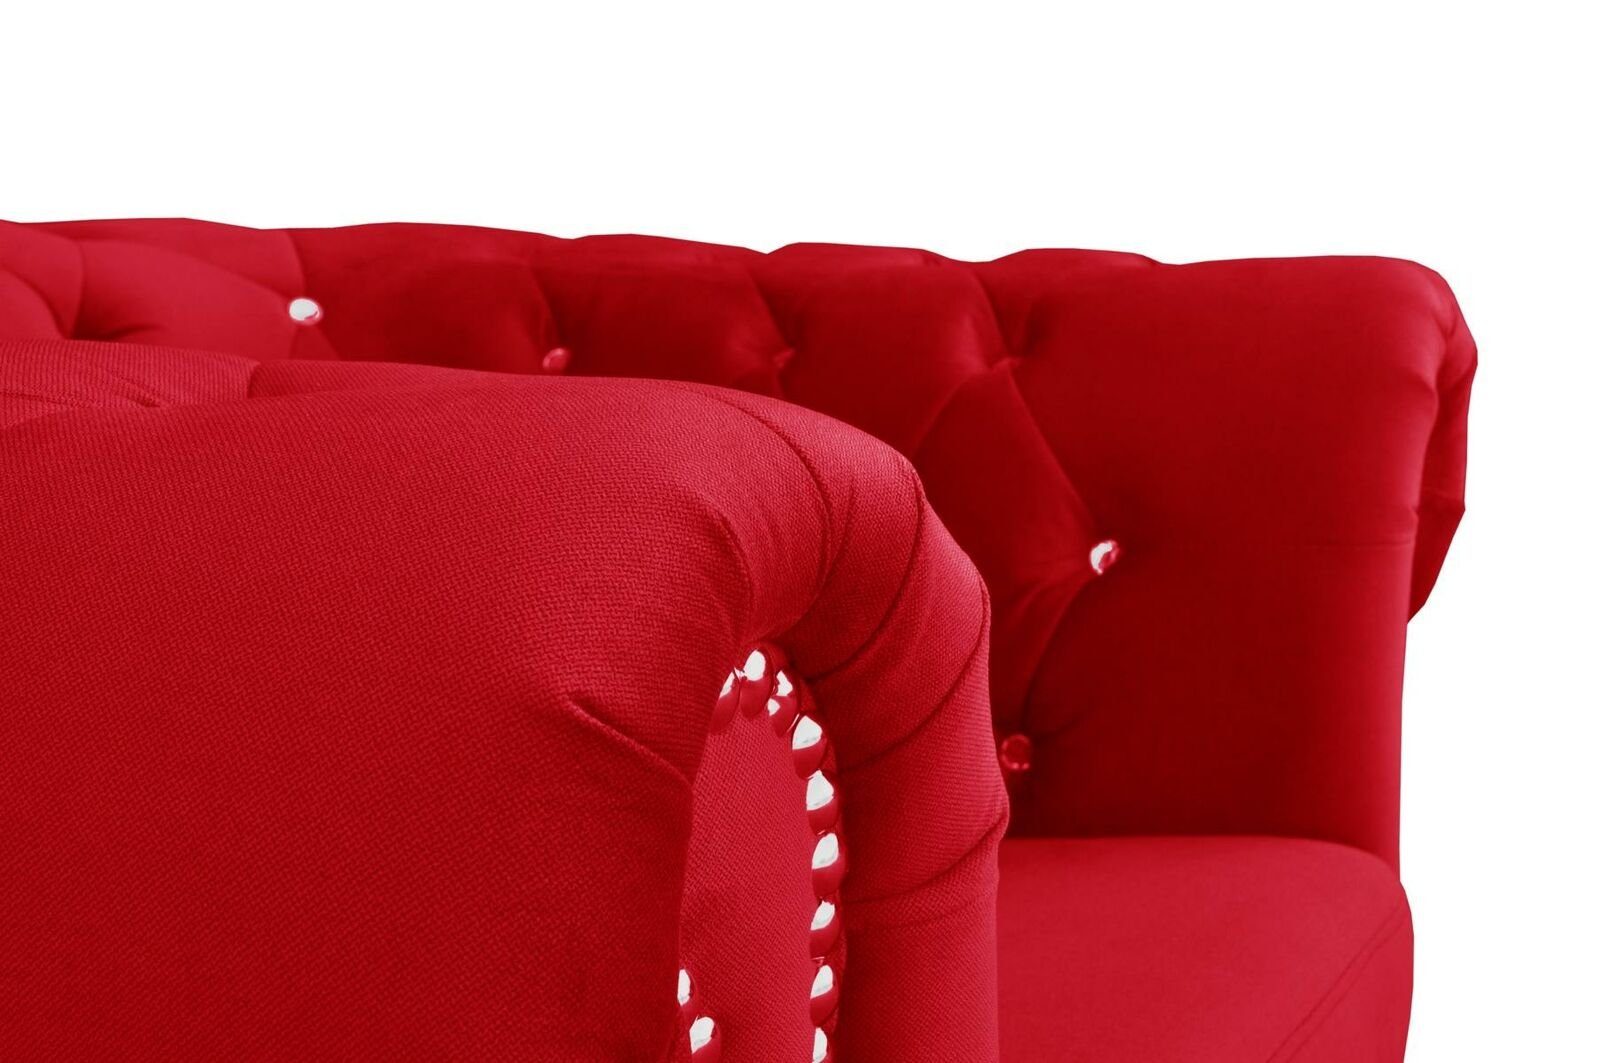 Sofagarnitur Klassische Sitzer Europe Couchen, Made Sofas Blaue JVmoebel in 3+1 Couch Sofa